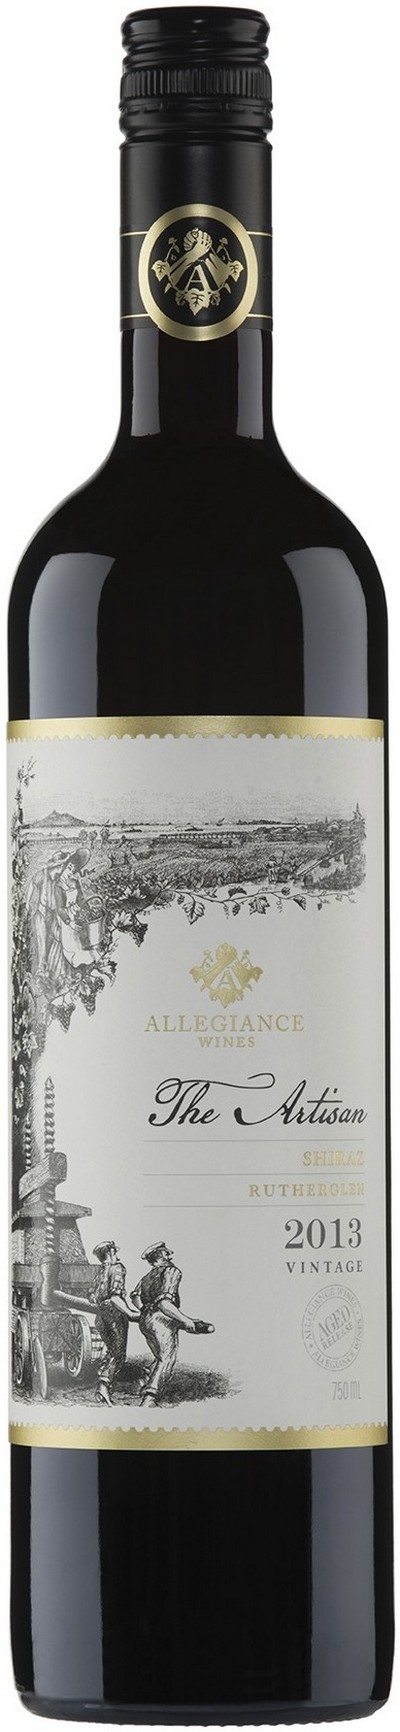 allegiance-wines-the-artisan-aged-release-rutherglen-shiraz-2013